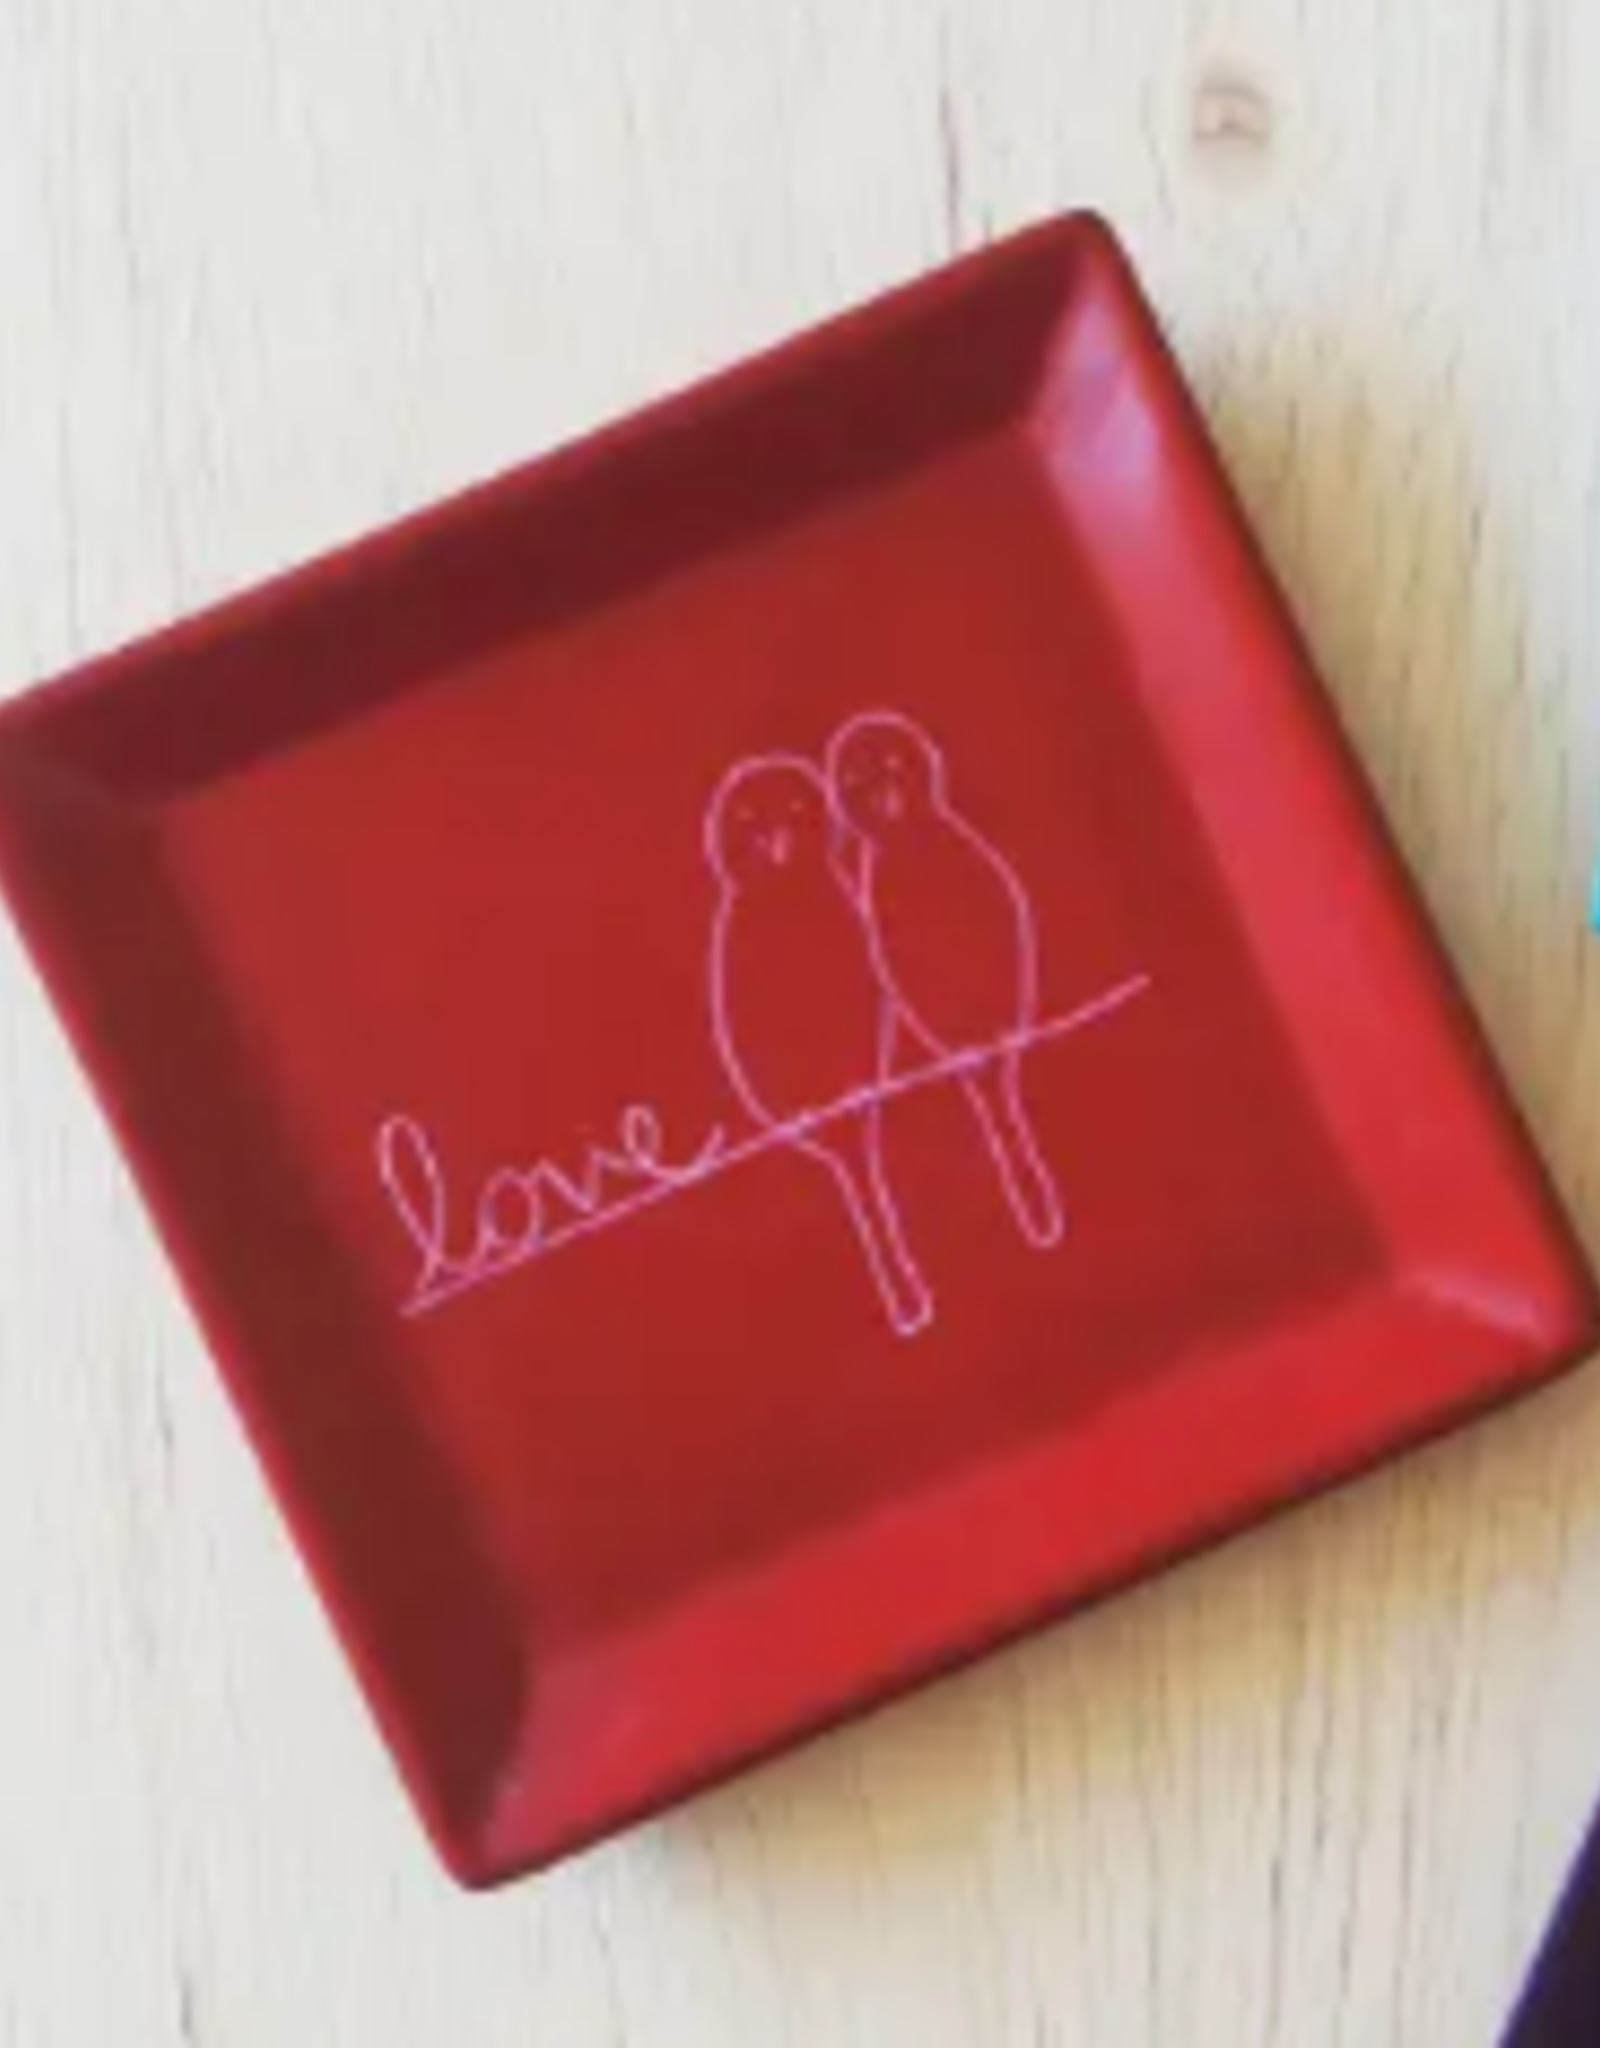 Venture Imports Square Bird Dish - Red Lovebird